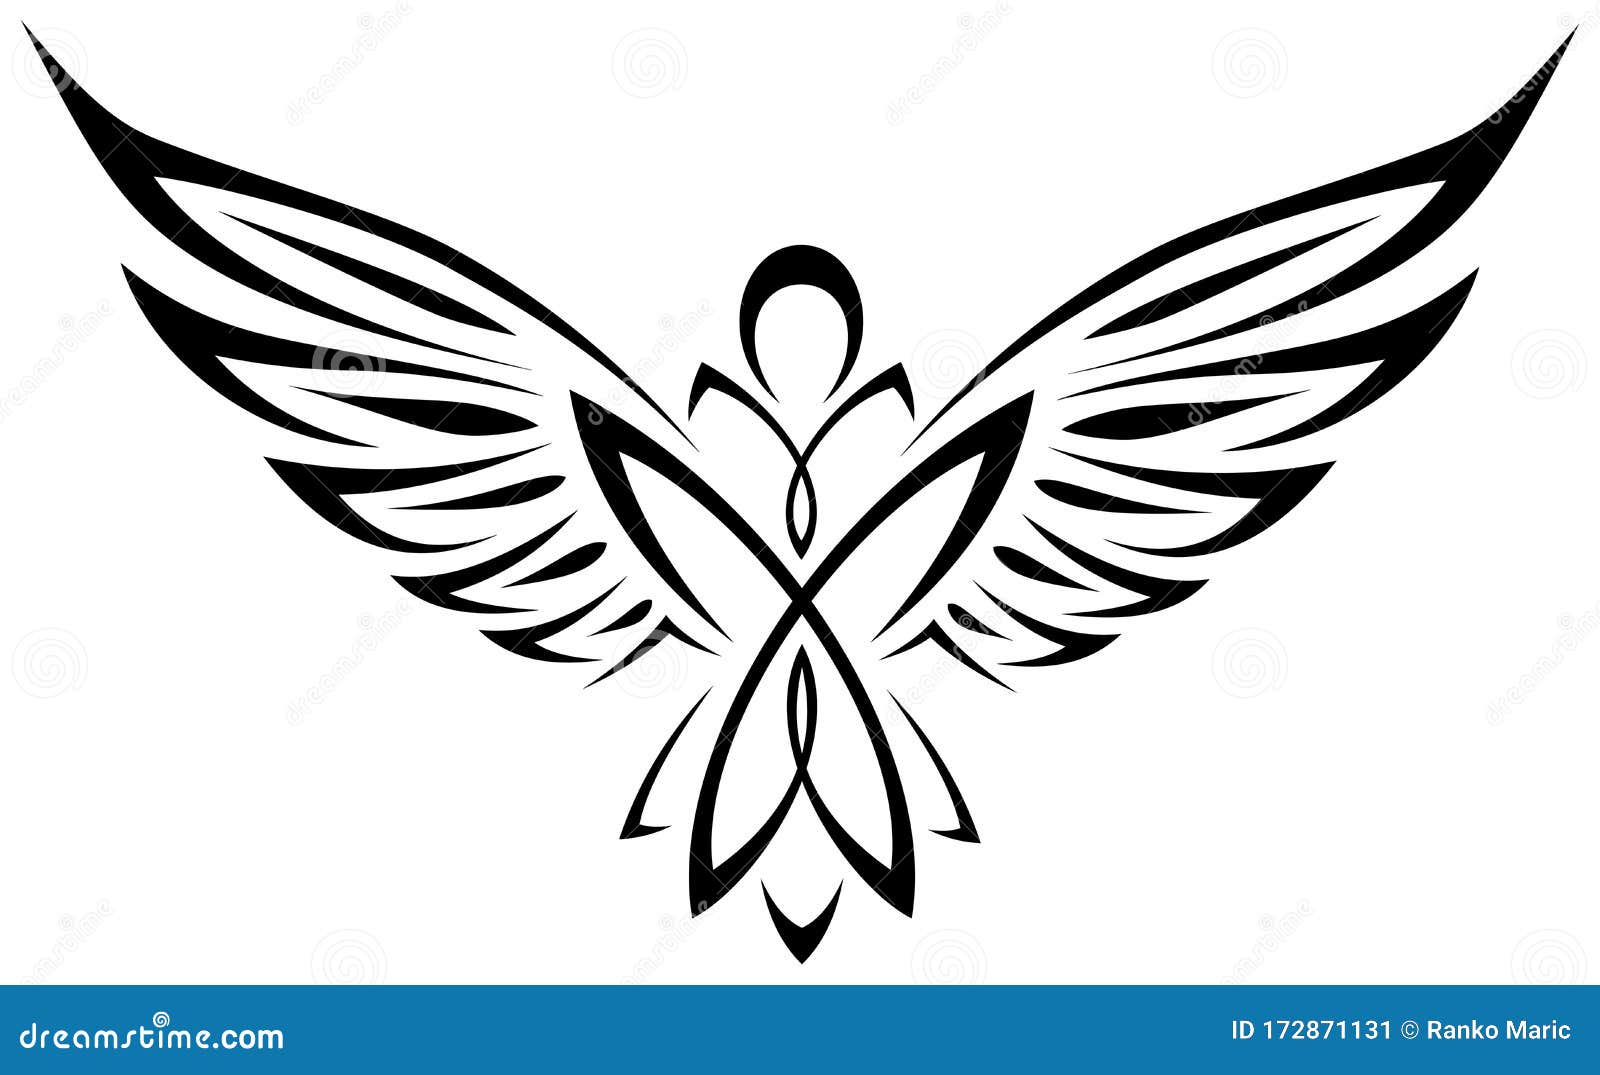 Angel Black and White Tribal Tattoo Stock Vector - Illustration of good,  romantic: 172871131